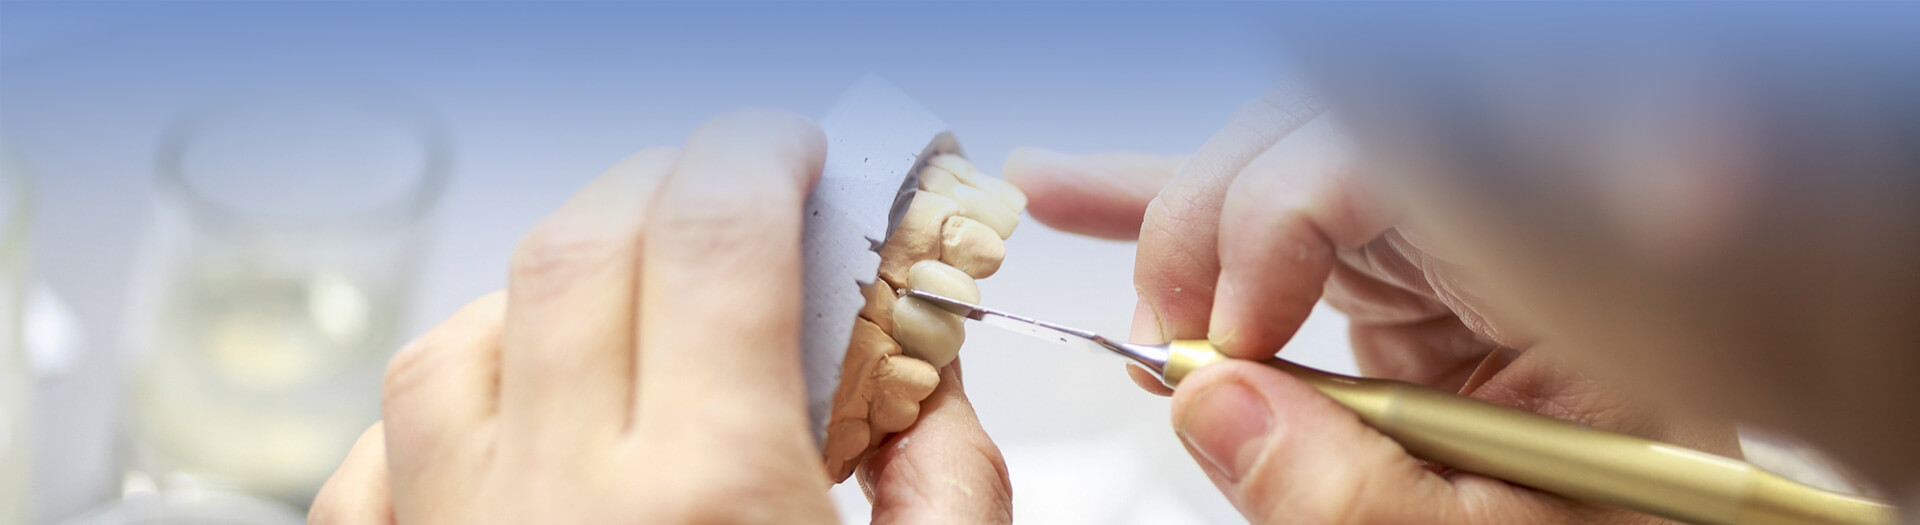 Dental technician working on a dental casting